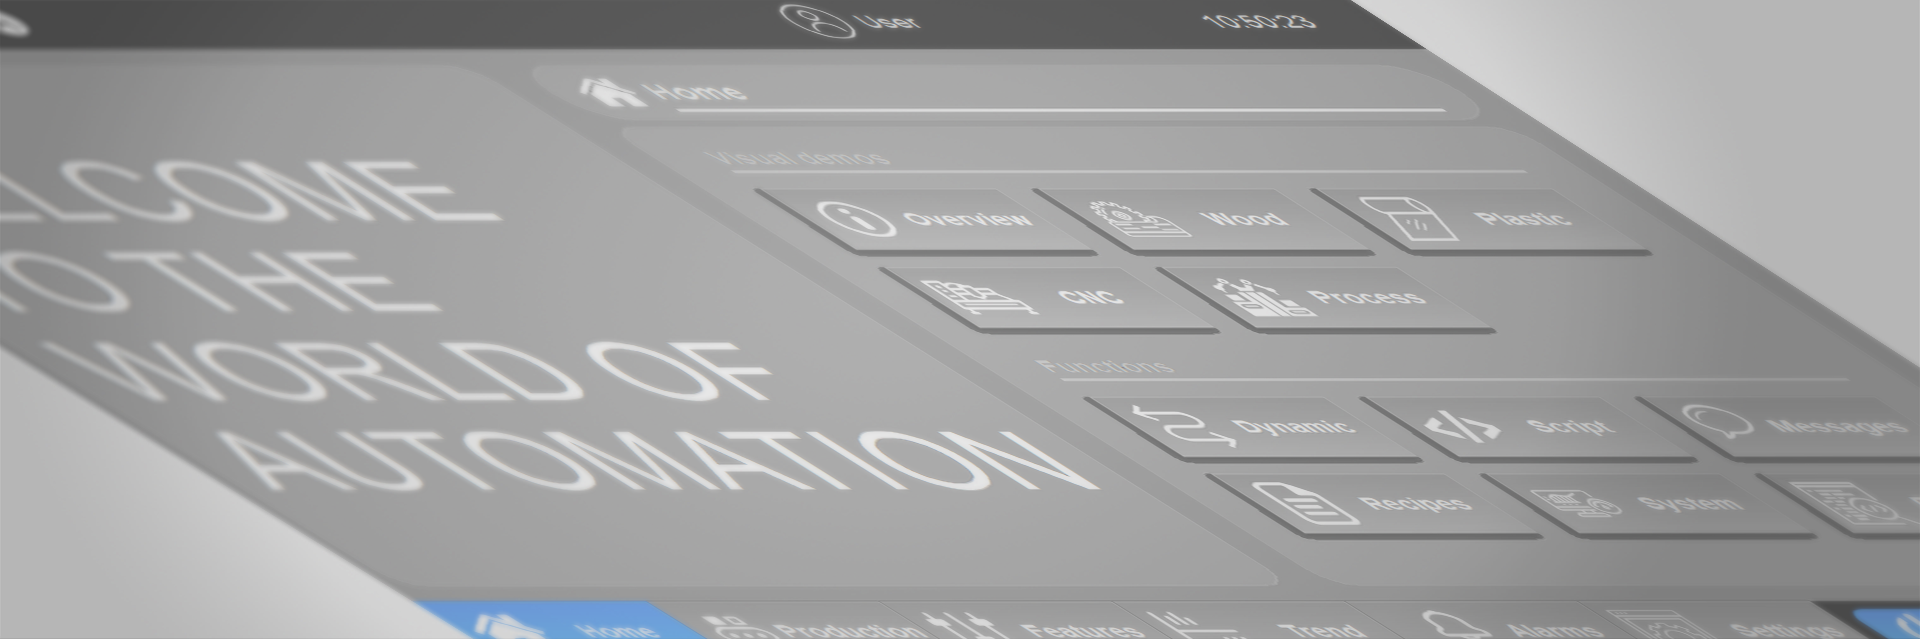 Screenshot of the visualisation platform COMBIVIS studio HMI 